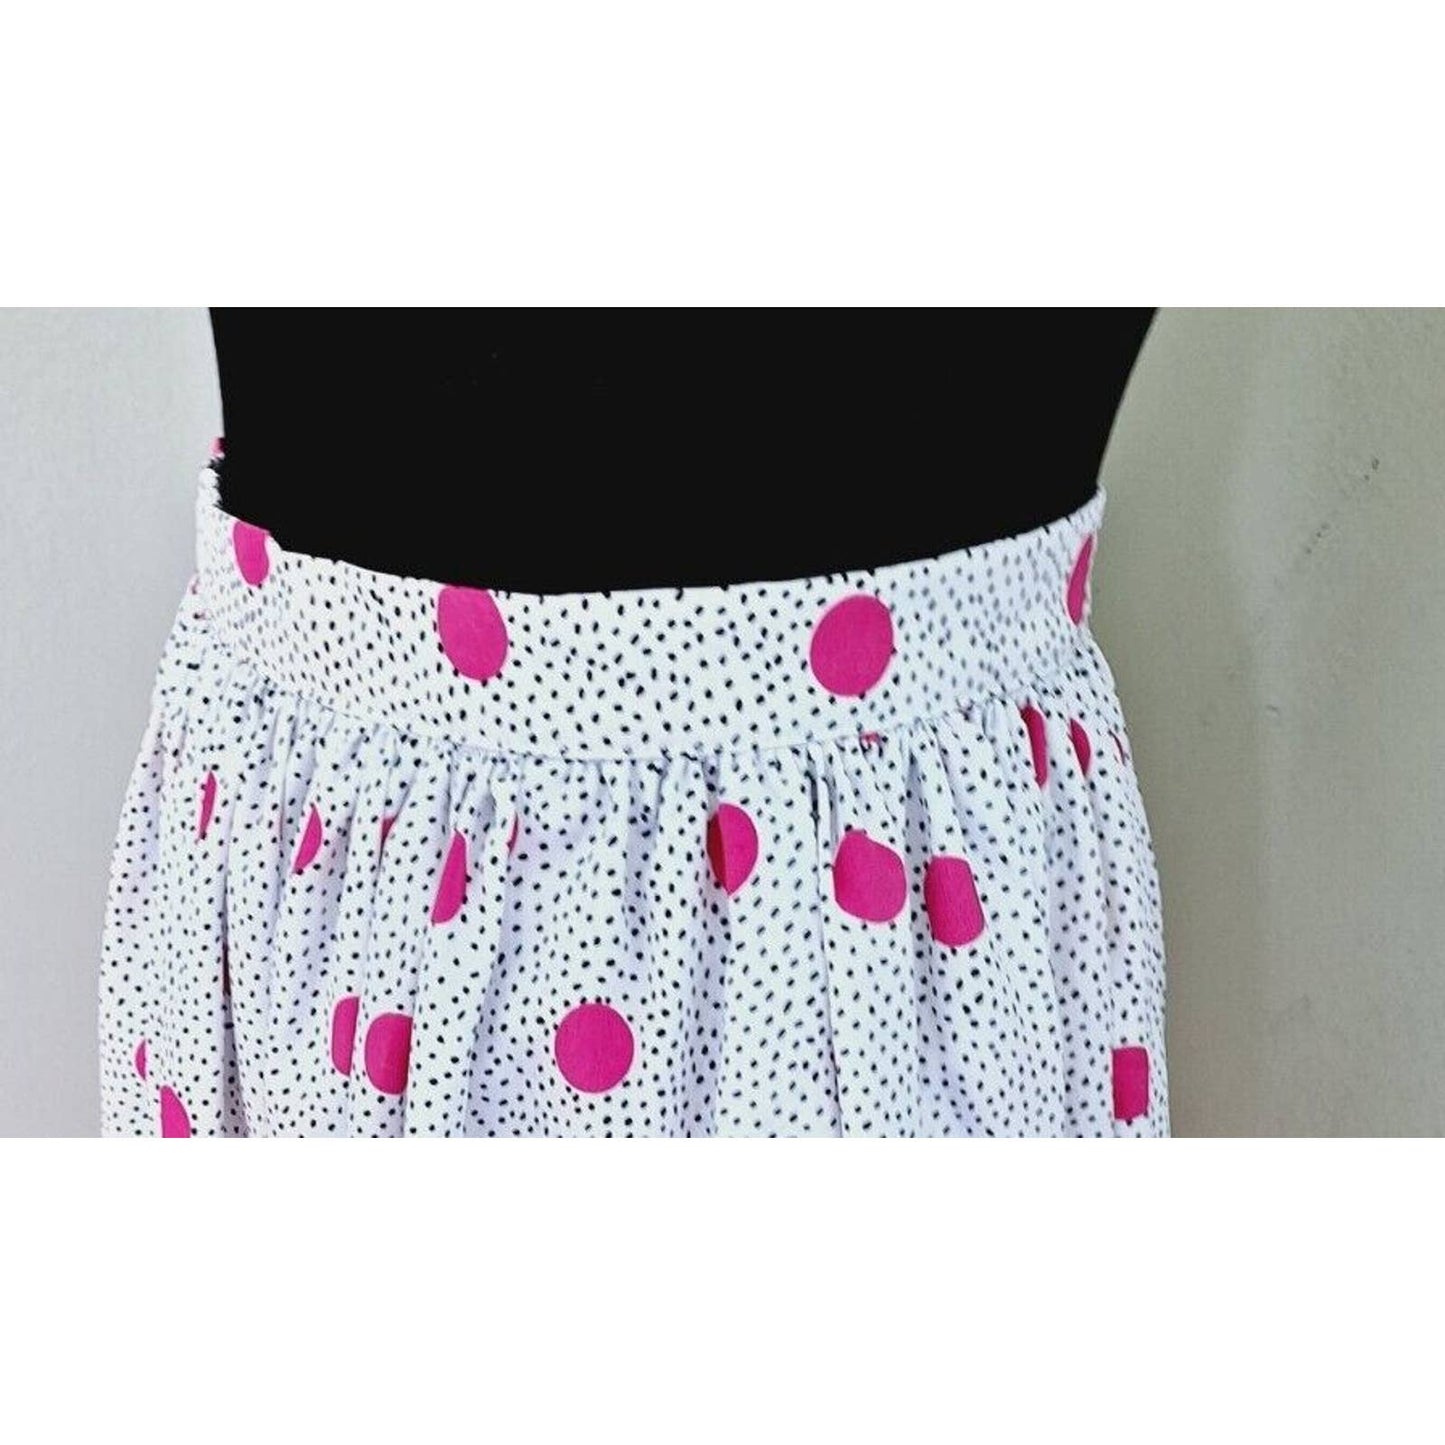 Vintage 80s Pink Polka Dot Skirt Size XS Waist 25"